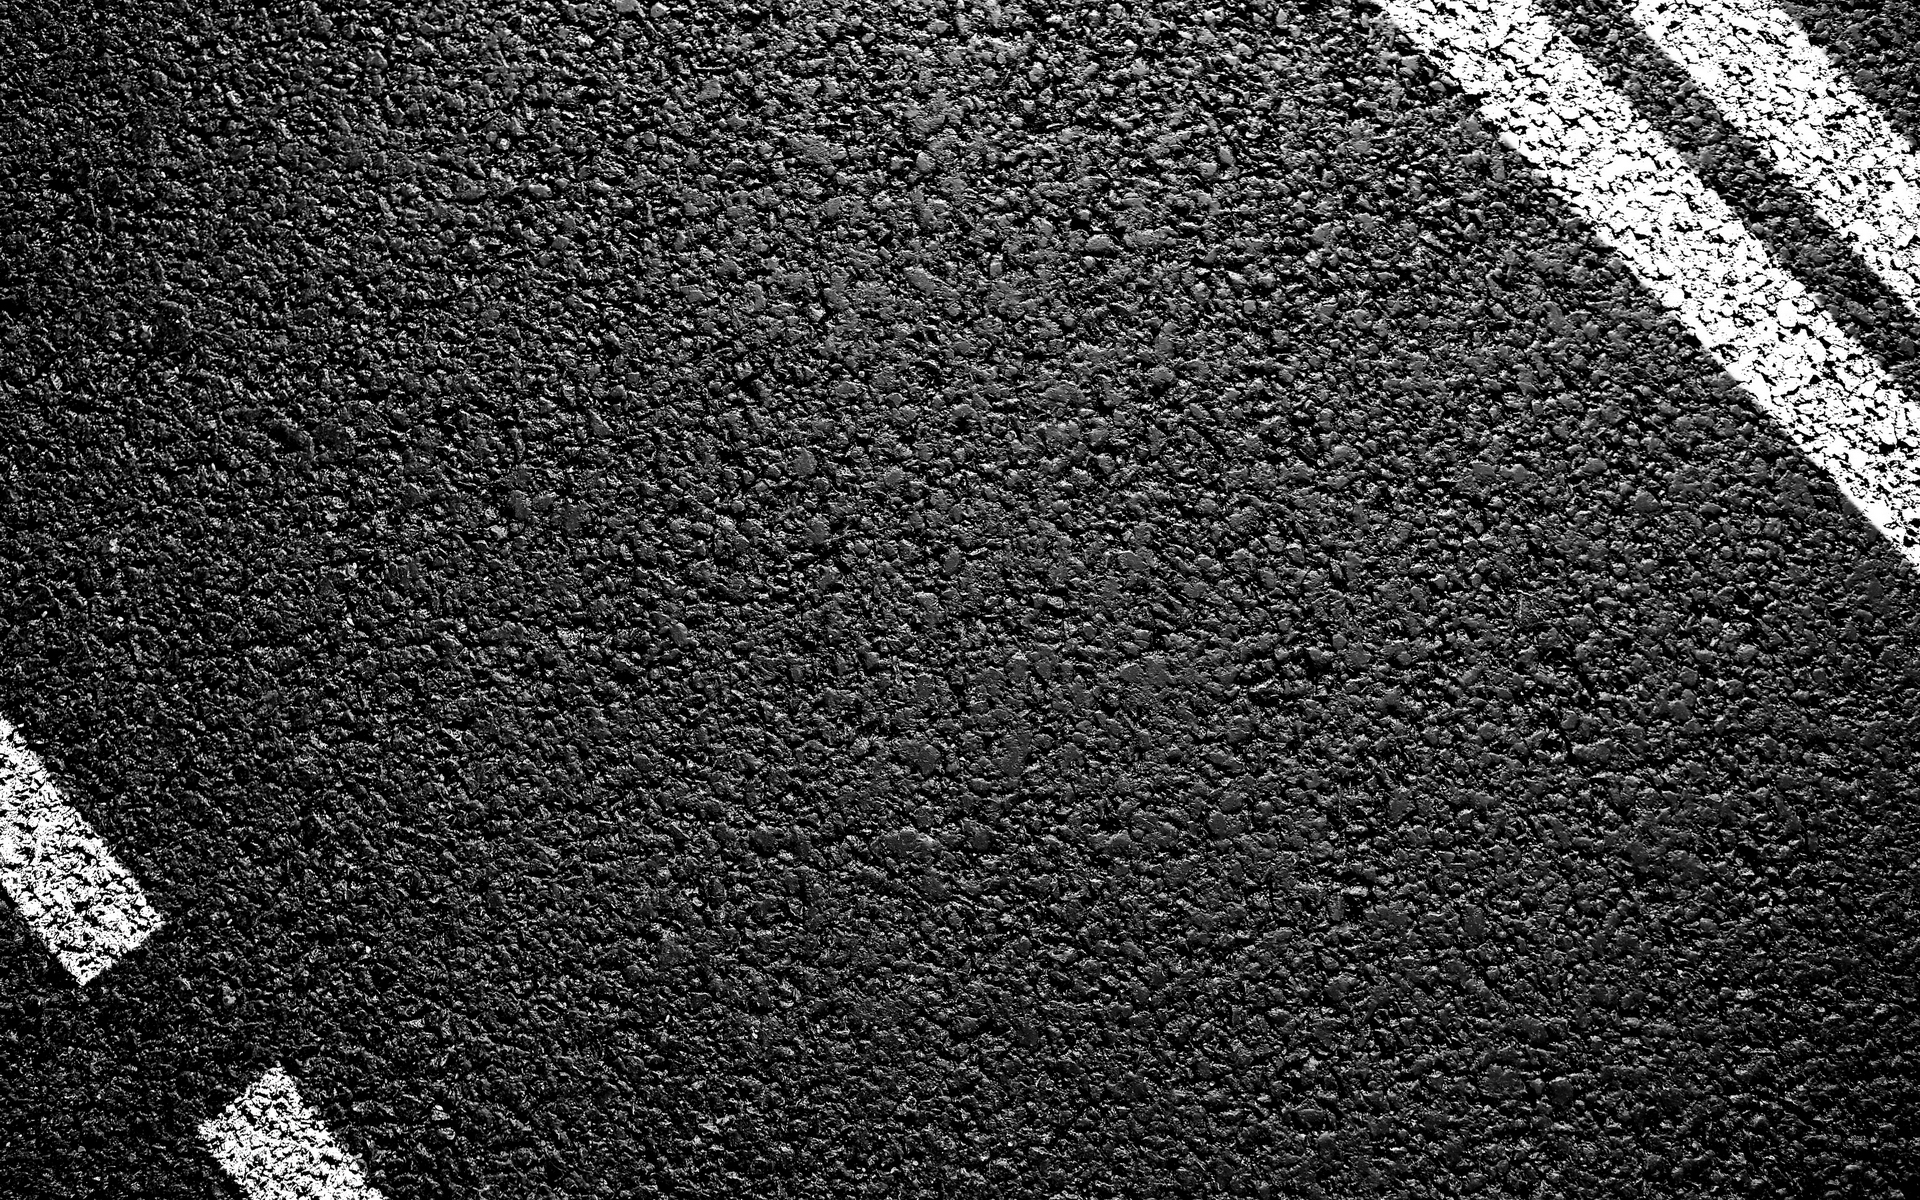 Texture Black Background White Stripes Asphalt And Road Markings